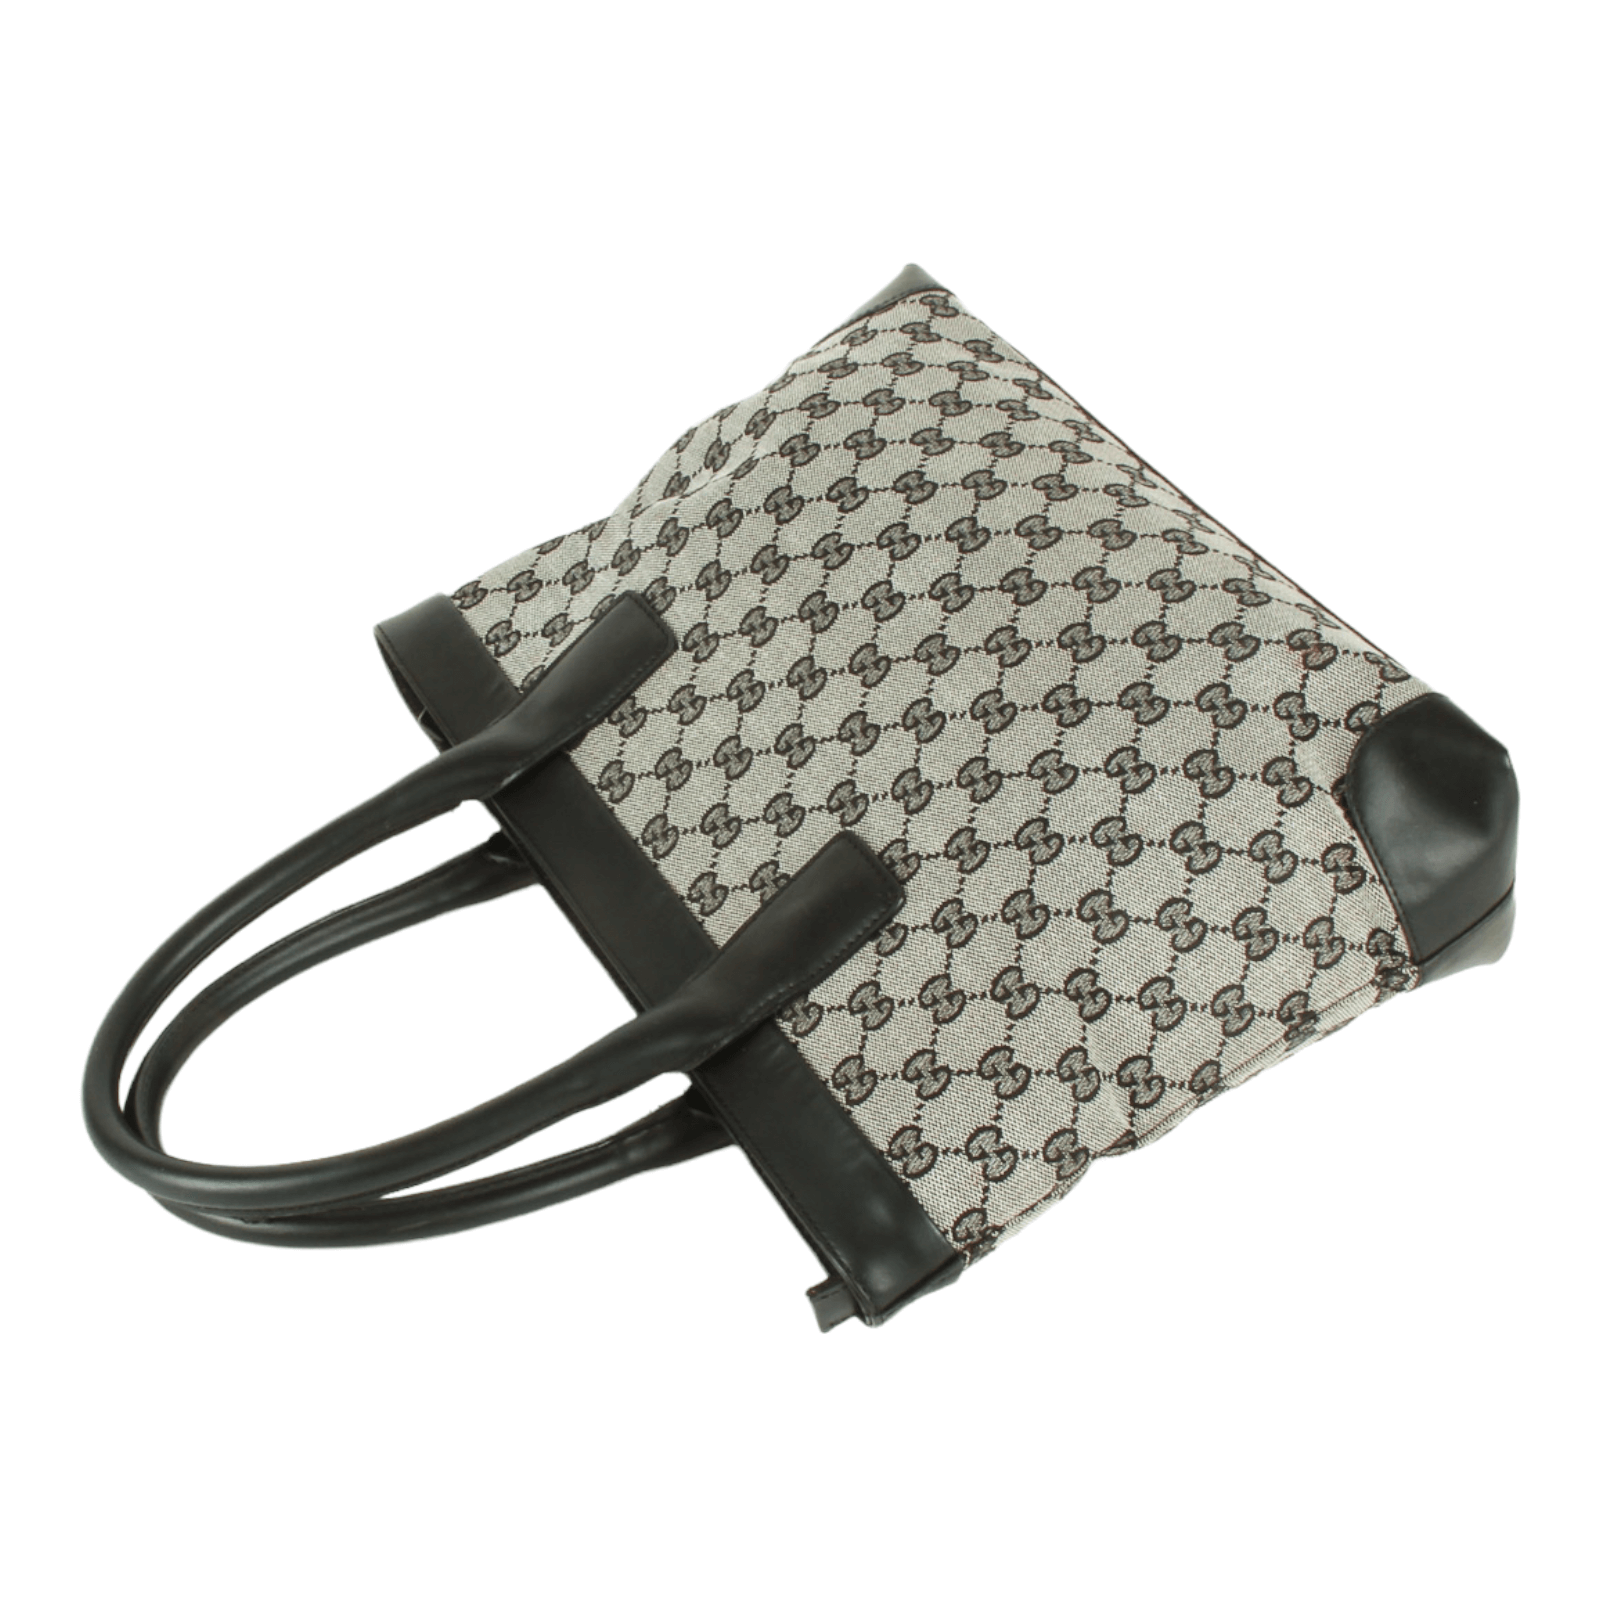 IMG-20210131-WA0021  Gucci handbags outlet, Gucci bag, Bags